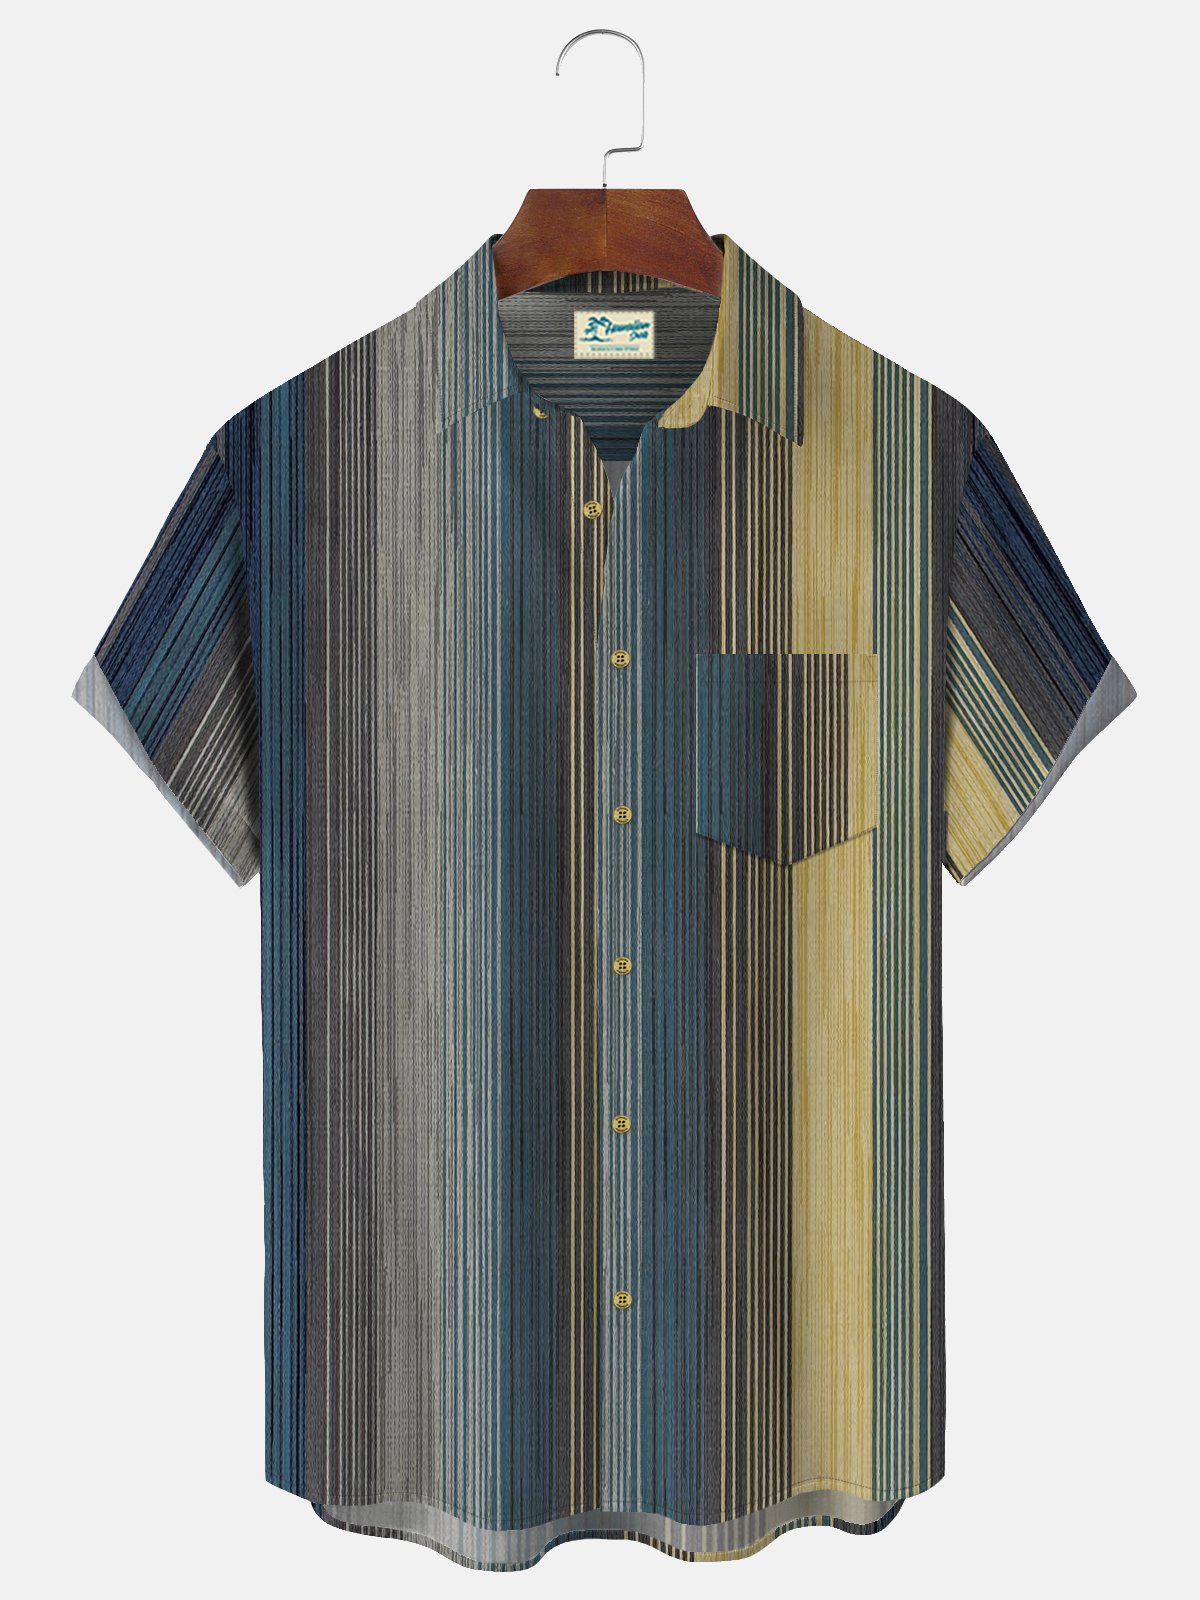 Royaura 50's Vintage Men's Aloha Camp Stripe Shirts Seersucker Wrinkle-Free Easy Care Casual Pocket Shirts